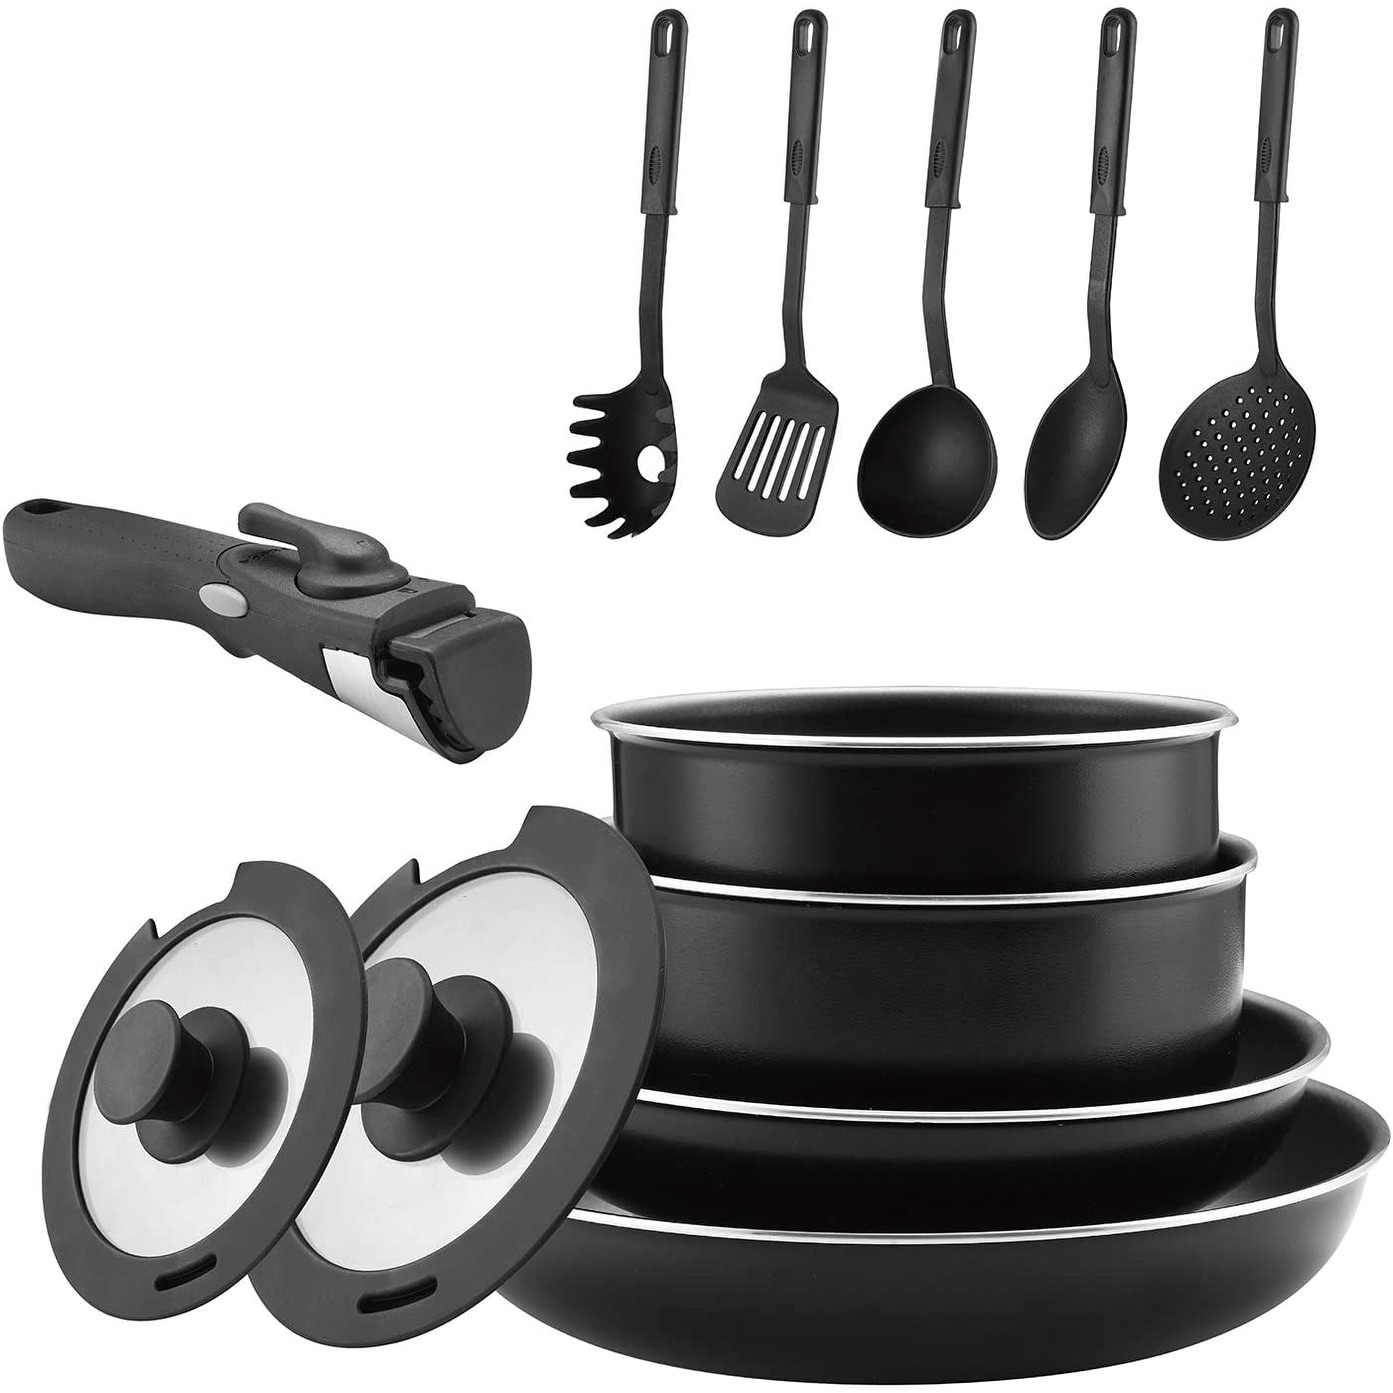 12 Piece Non-Stick Cookware Set Non-Stick Pans and Pots with Removable Handles - 12 Pieces